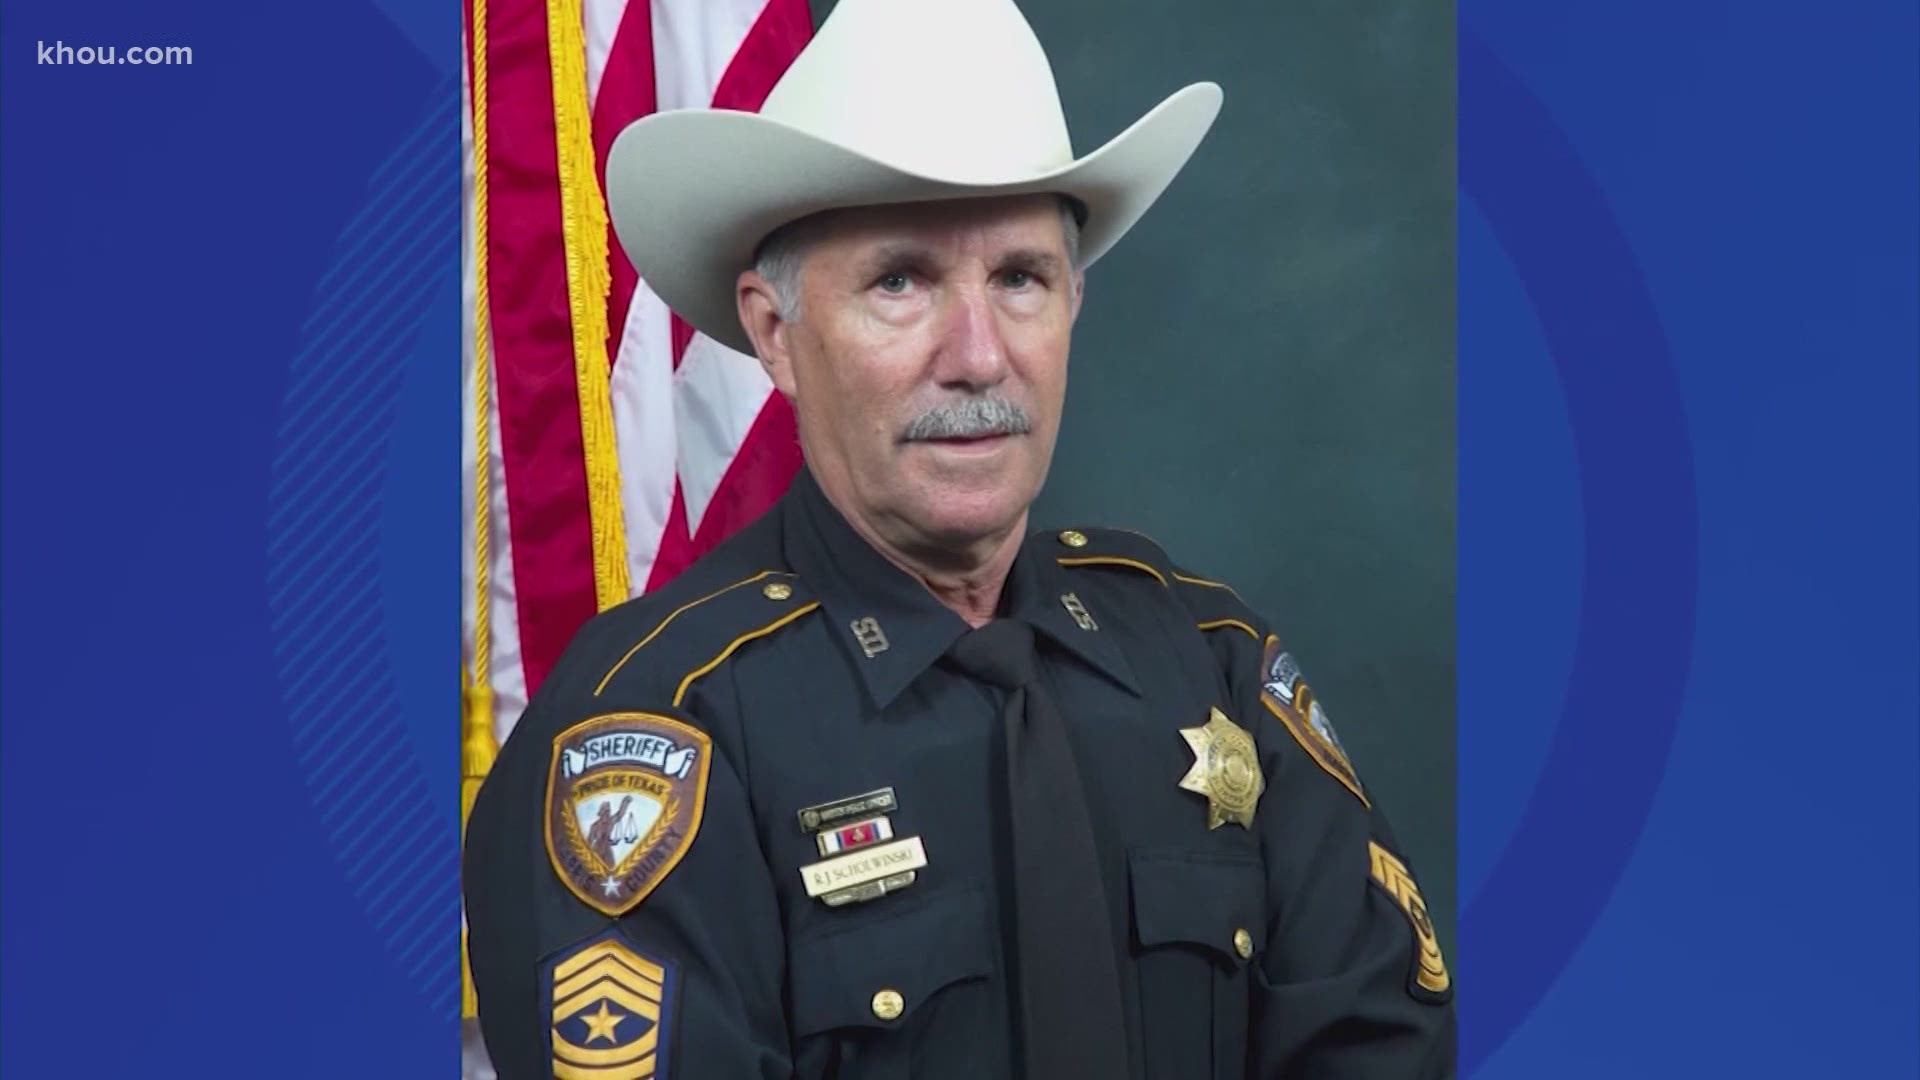 Harris County Sheriff’s deputy Sgt. Raymond Scholwinski died Wednesday after battling COVID-19. He was 70.